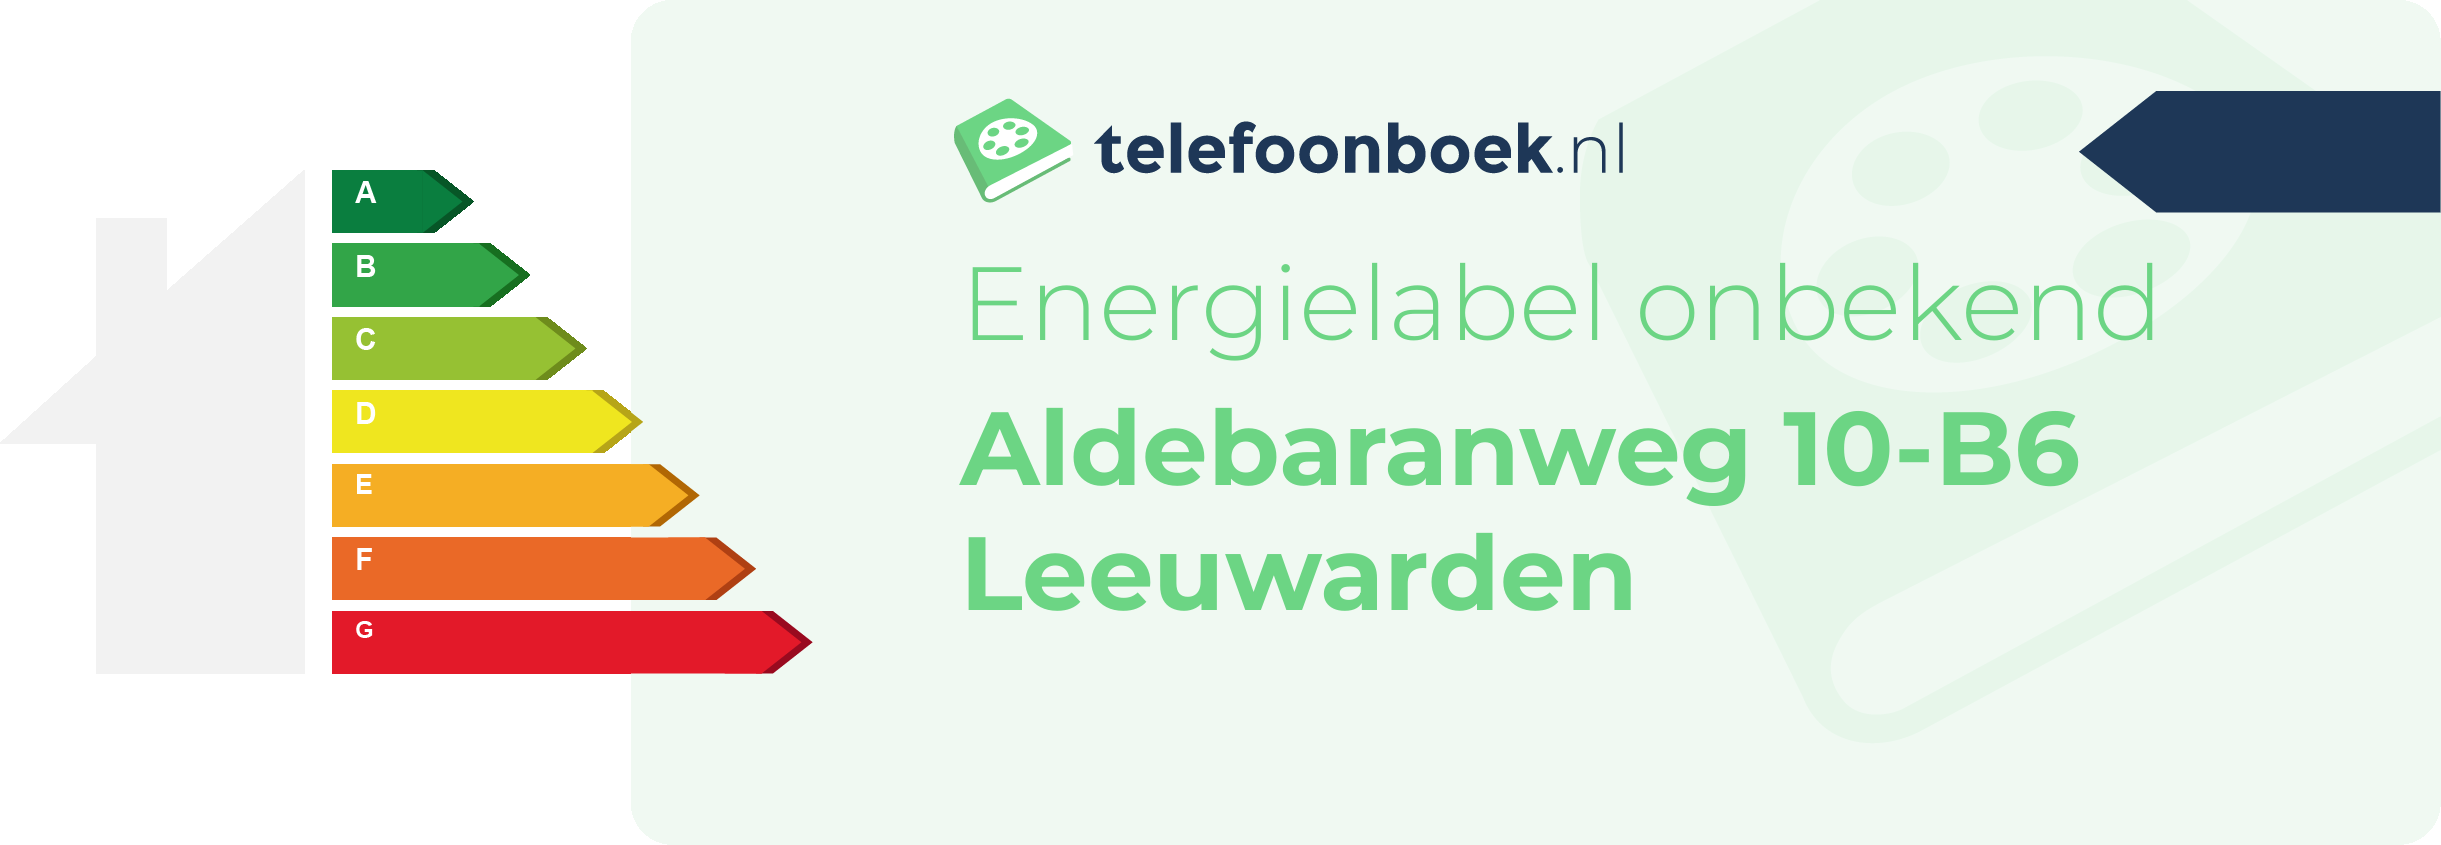 Energielabel Aldebaranweg 10-B6 Leeuwarden